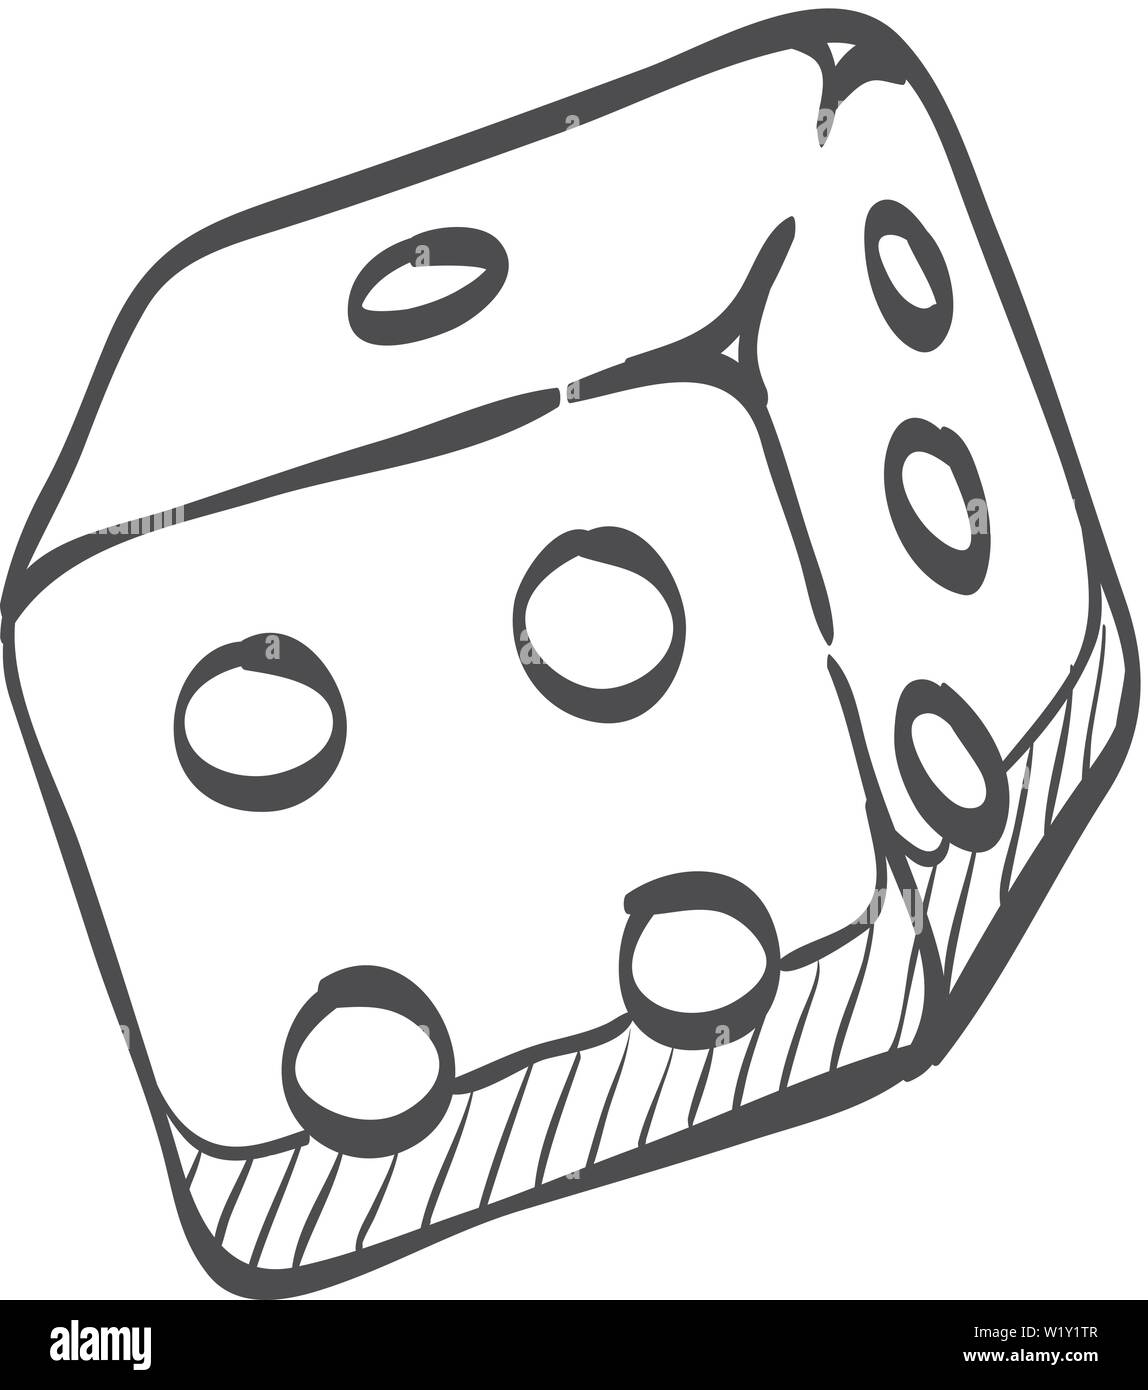 Würfel Symbol in doodle Skizze Linien. Freizeit Spiel kasino spielen chance  Gelegenheit Stock-Vektorgrafik - Alamy